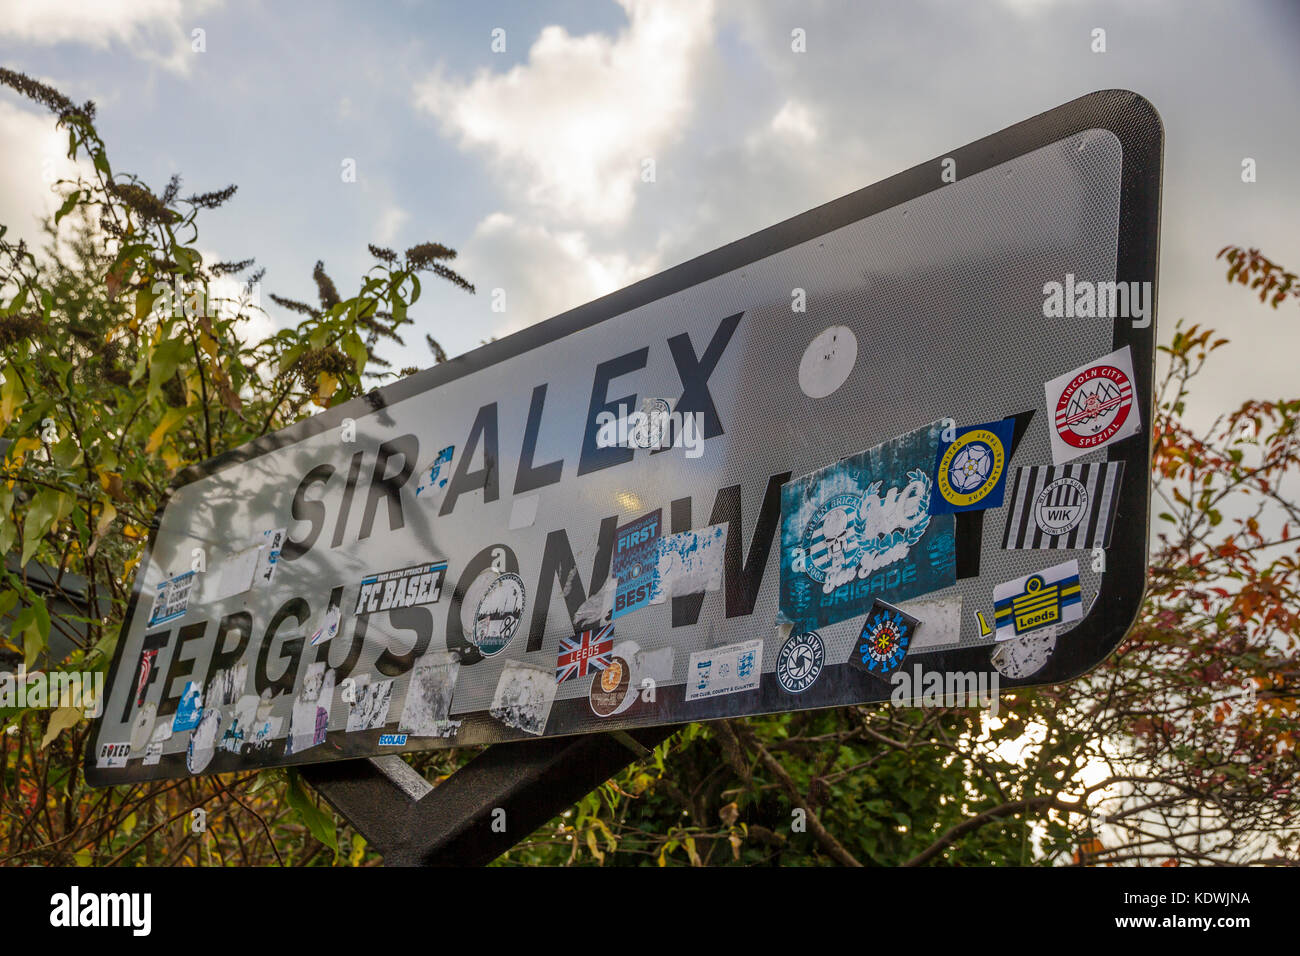 Footbll Stickers on the Sir Alex Ferguson Way Road Sign near Old Trafford Football Stadium. Stock Photo